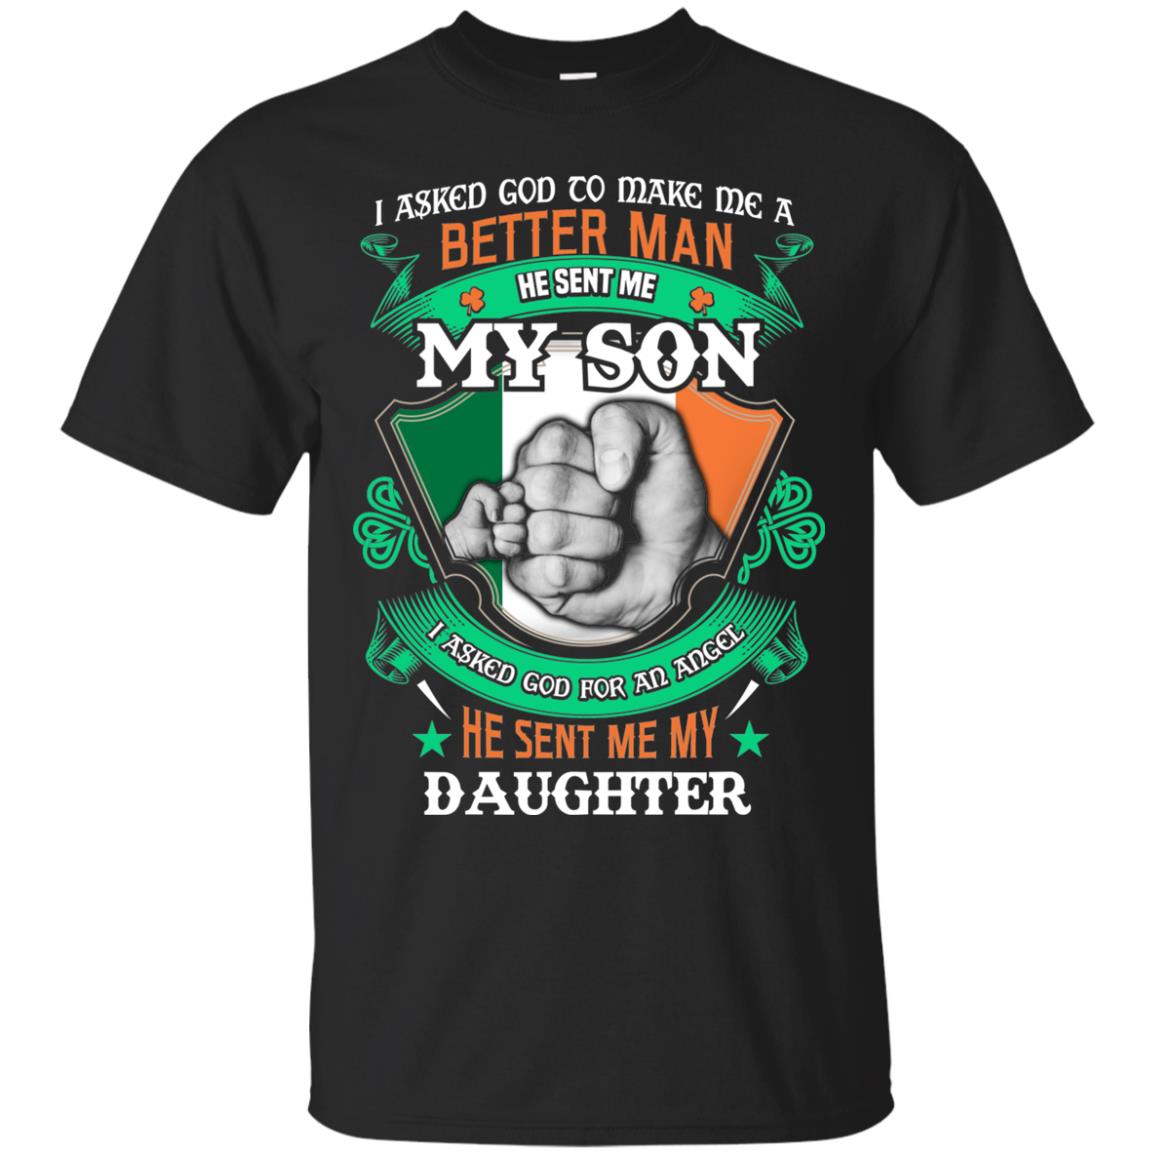 He Sent Me My Son He Sent Me My Daughter Saint Patrick's Day Shirt For DadG200 Gildan Ultra Cotton T-Shirt